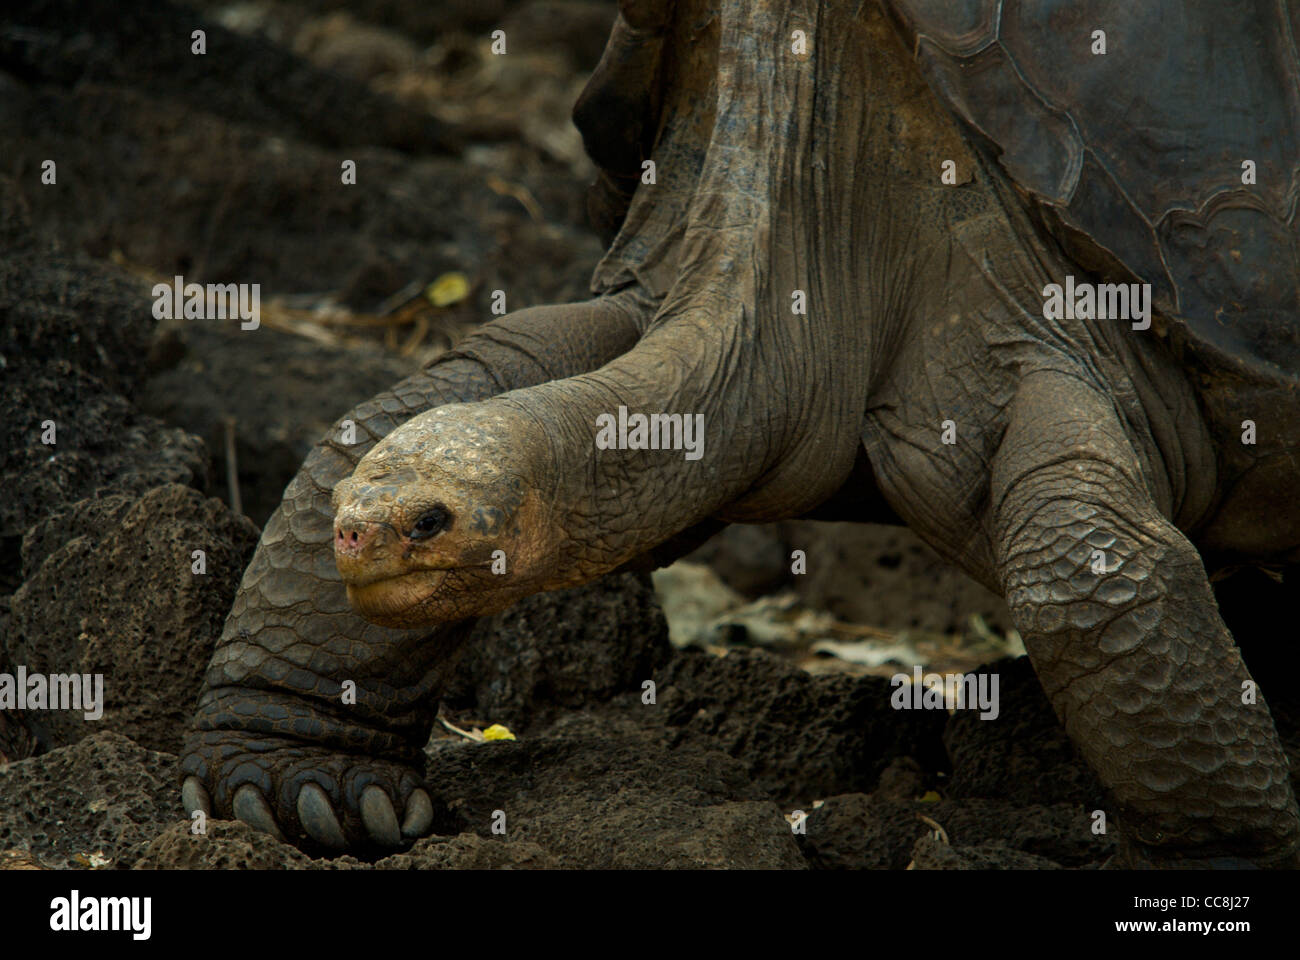 Lonesome George in all his glory. Pinta Island Giant Tortoise (Chelonoidis nigra abingdoni). Extinct in the wild. Santa Cruz. Stock Photo